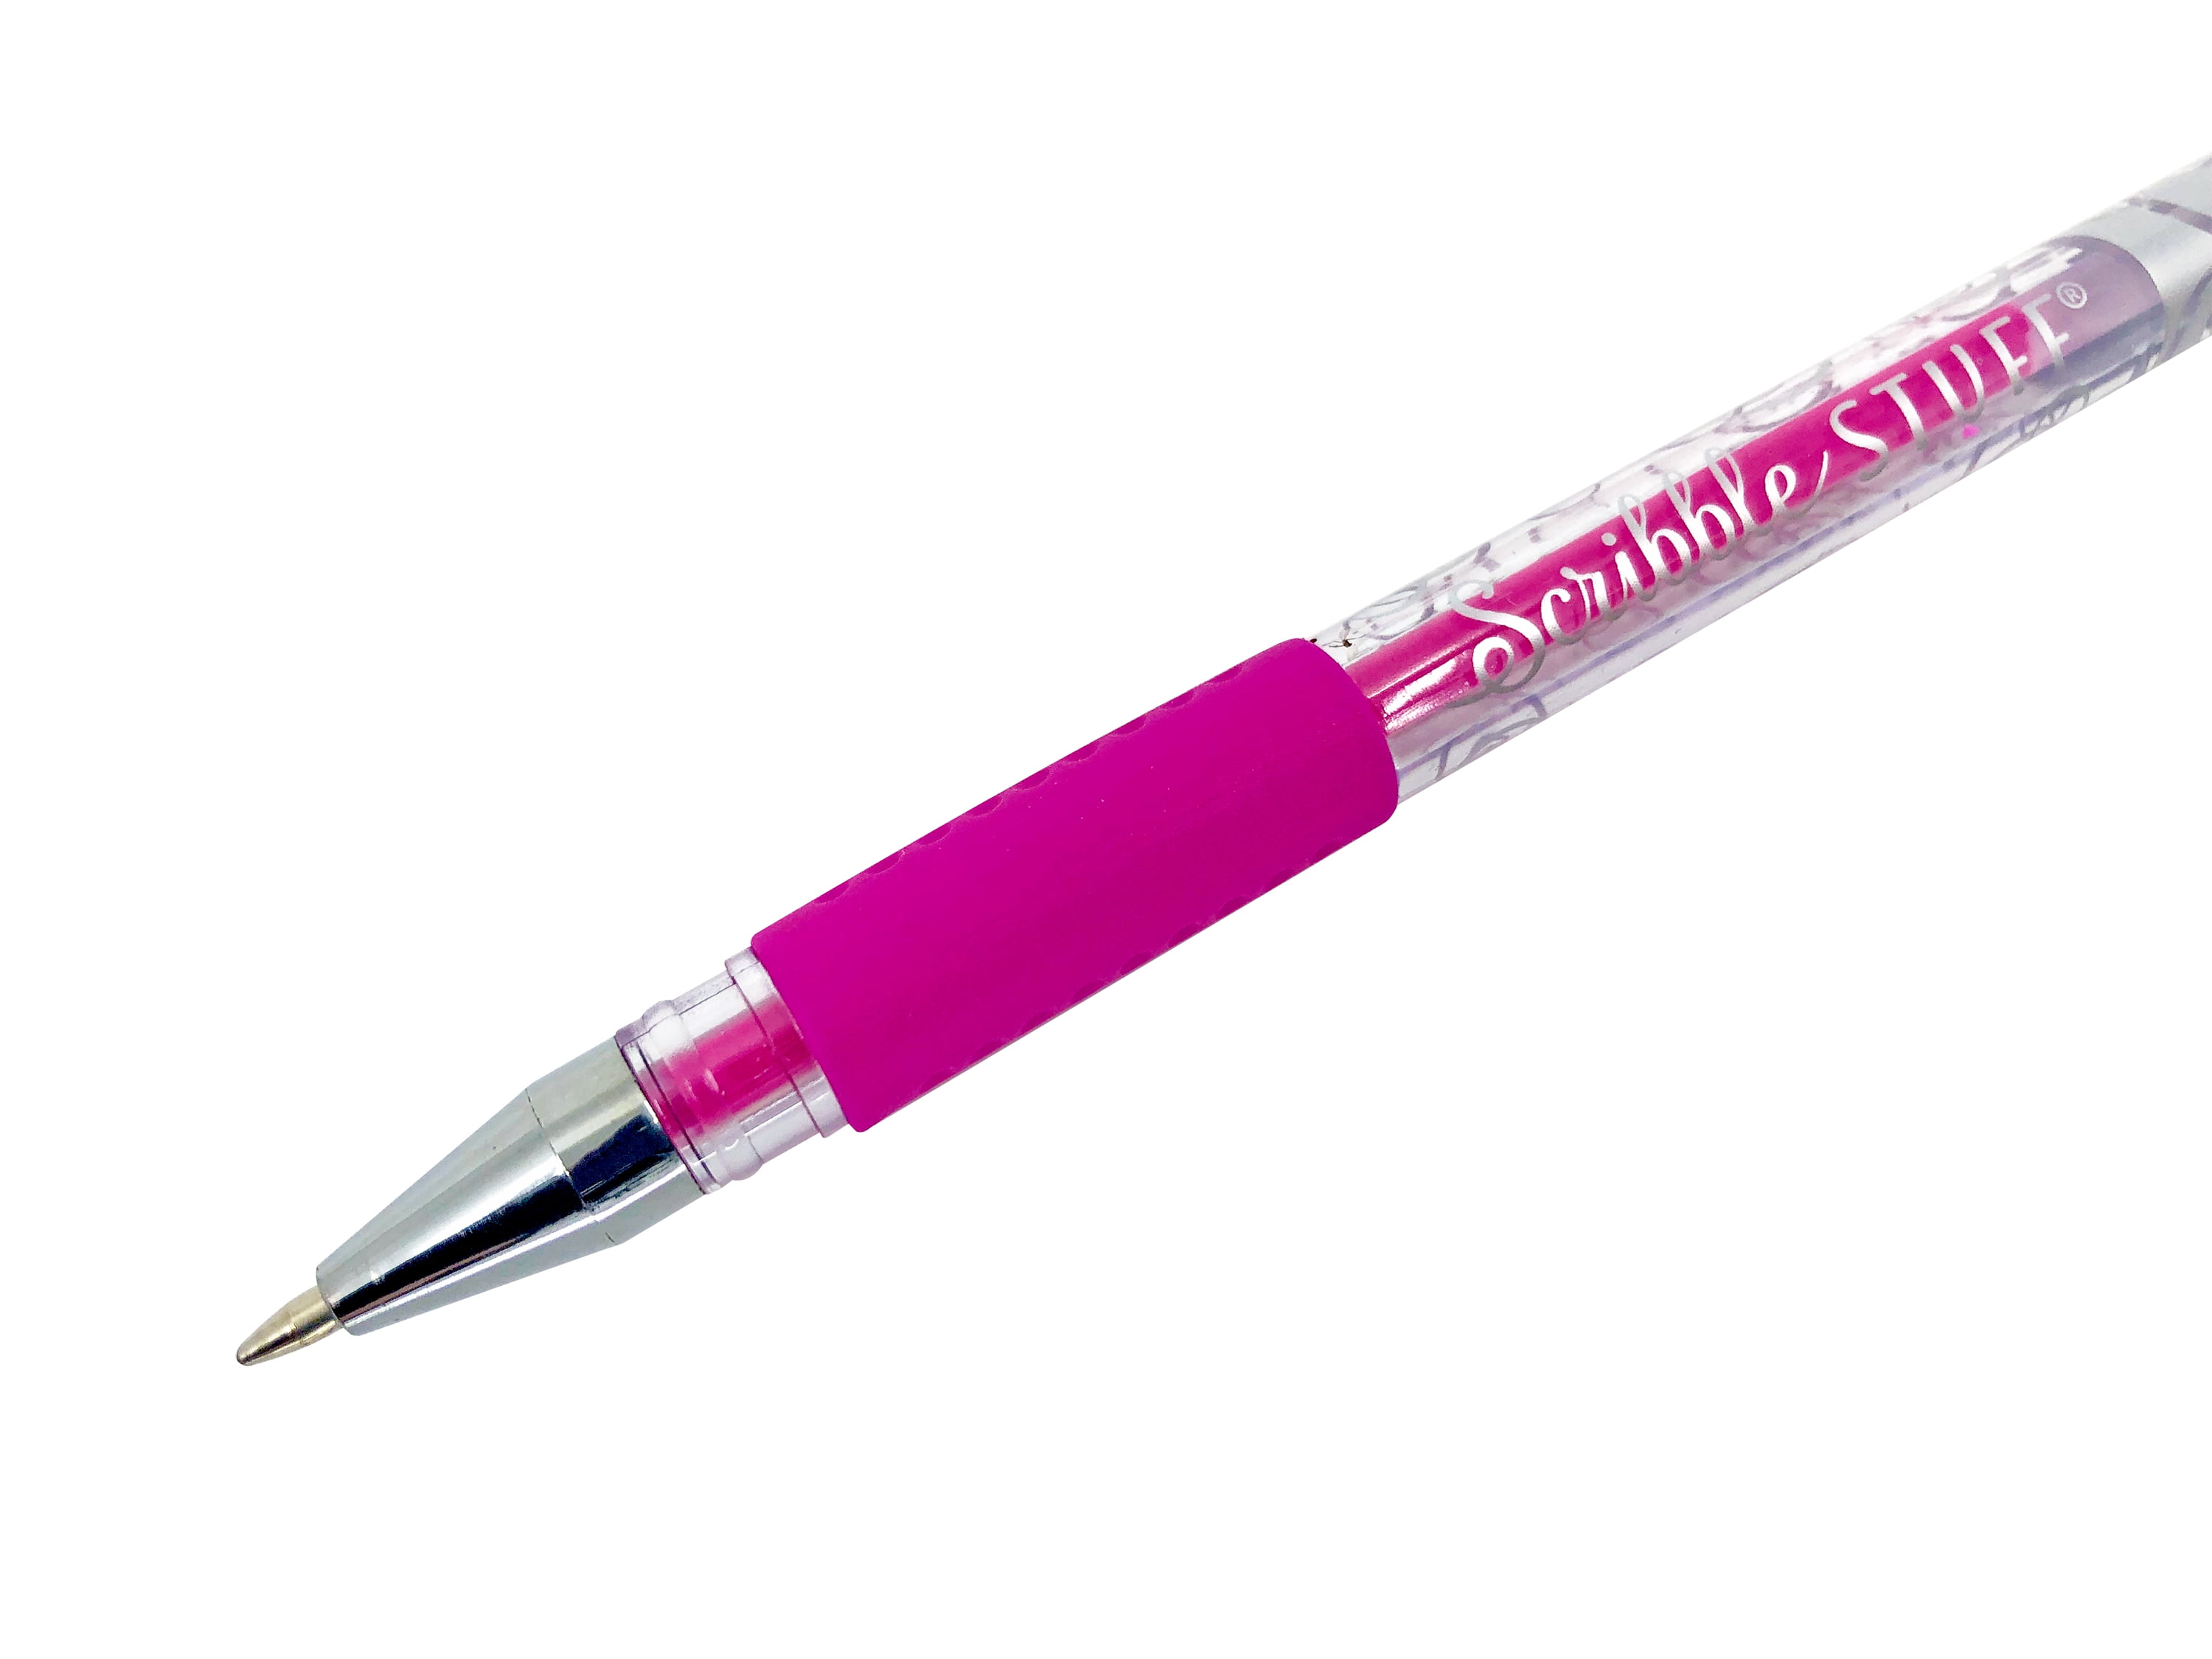 Neon Sassy Weekday Pen Gel Pen Set, Glitter Pen Set, Personalized Pen,  Refillable Pen, Gifts for Her, Teacher / Office Gift